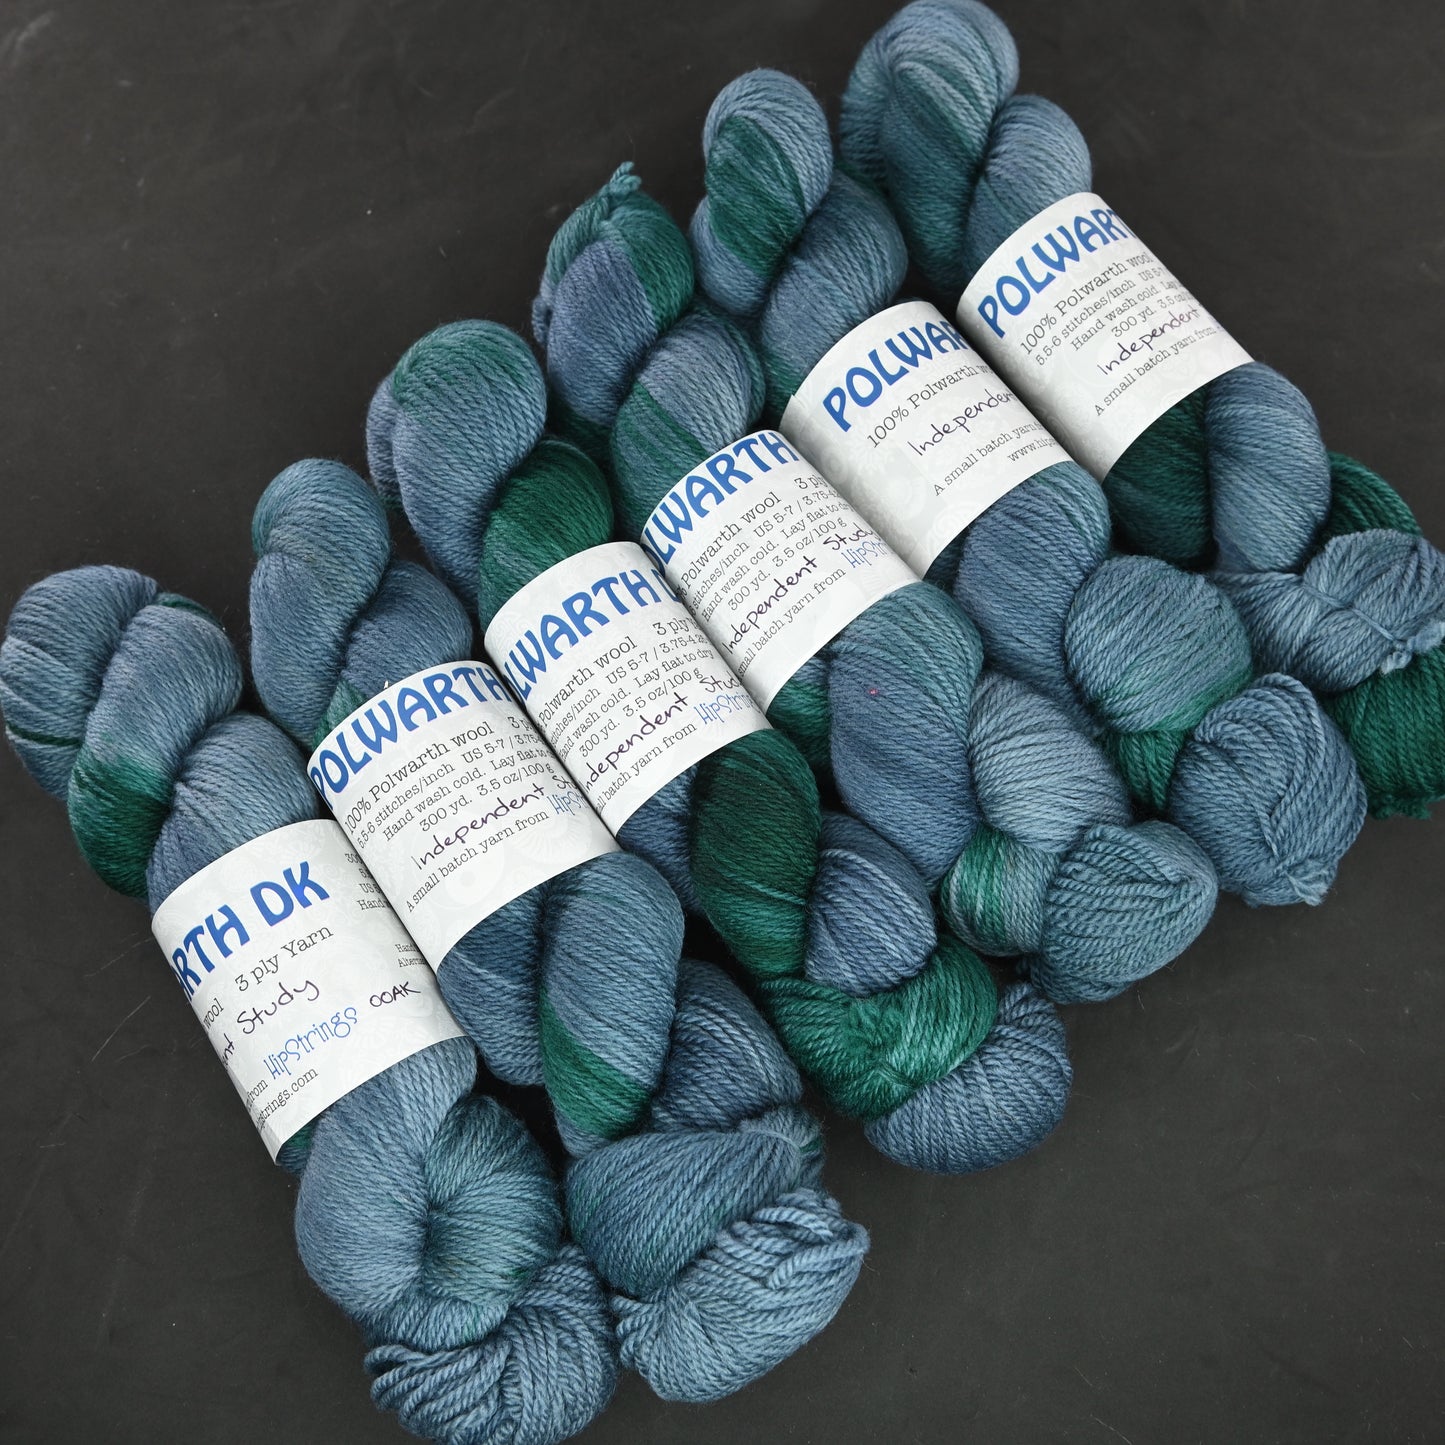 Independent Study Blue Green on Polwarth Wool DK yarn